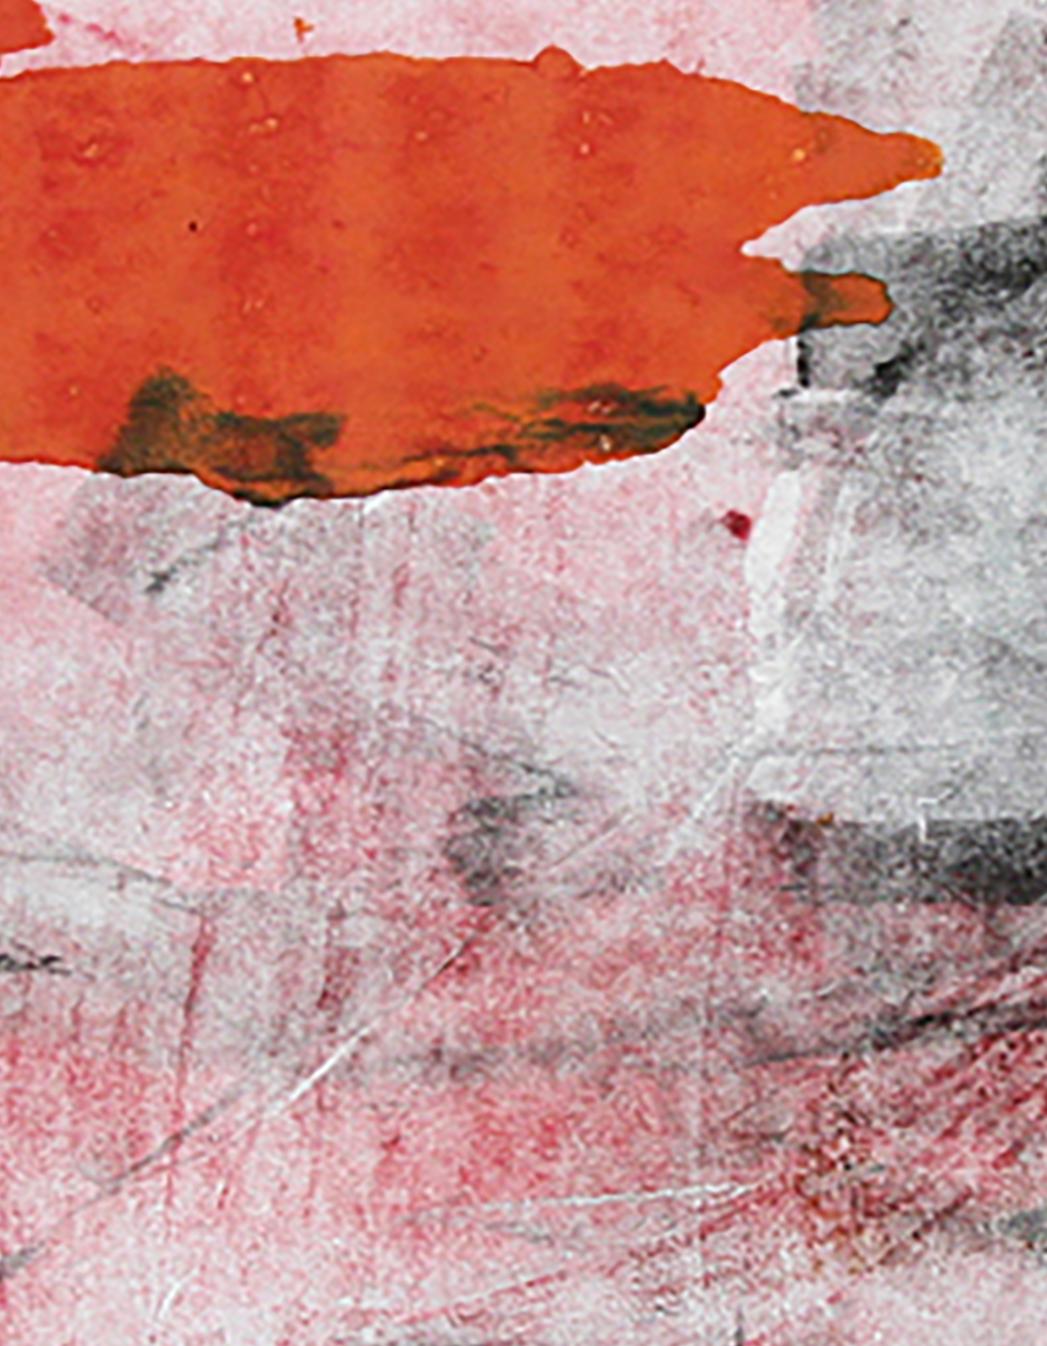 OrangeBlast(R), orange and black abstract monotype on paper - Contemporary Mixed Media Art by Karin Bruckner